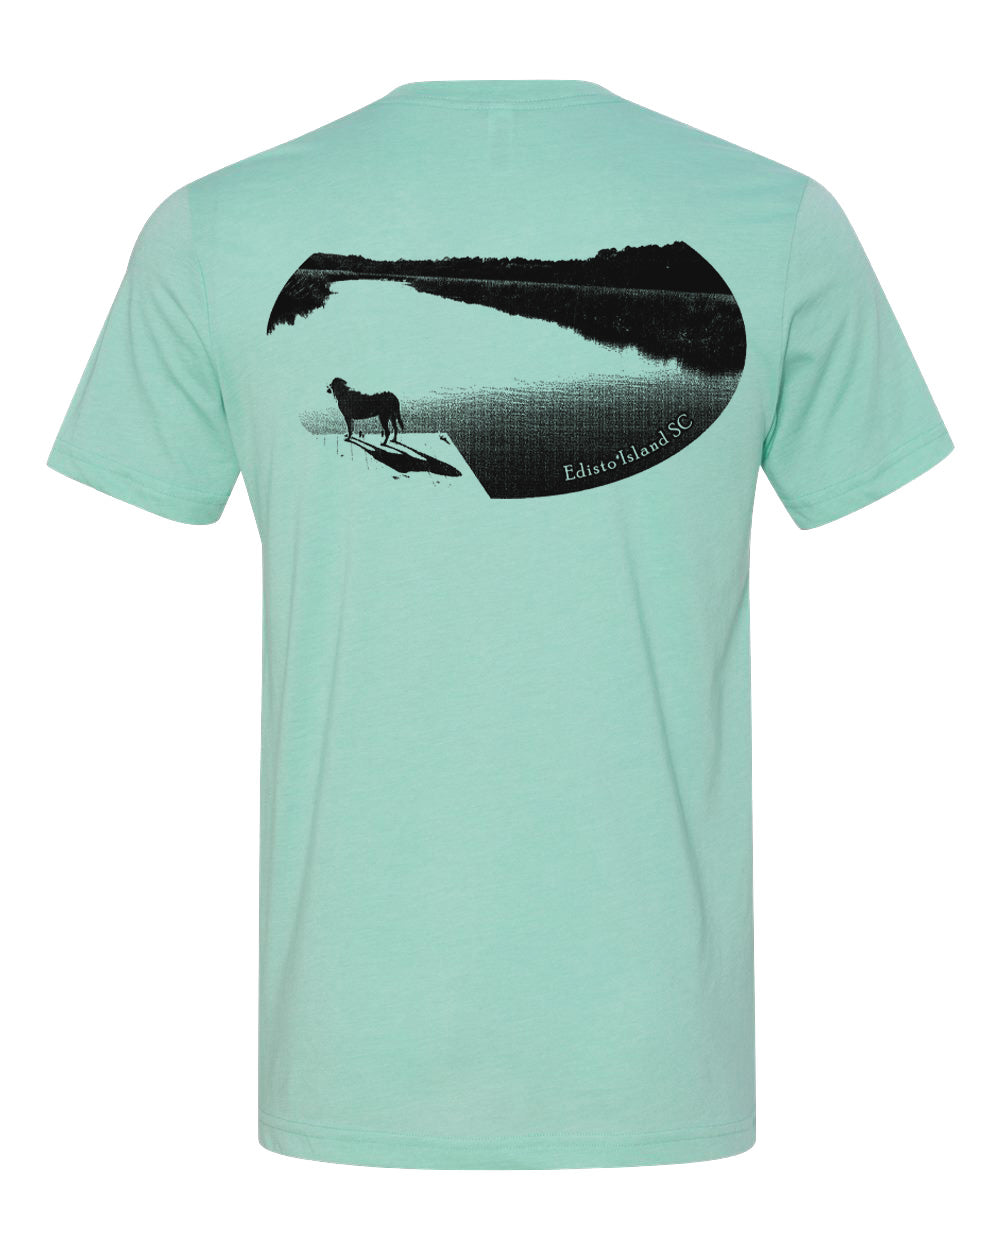 Edisto Island Short Sleeve T-shirt